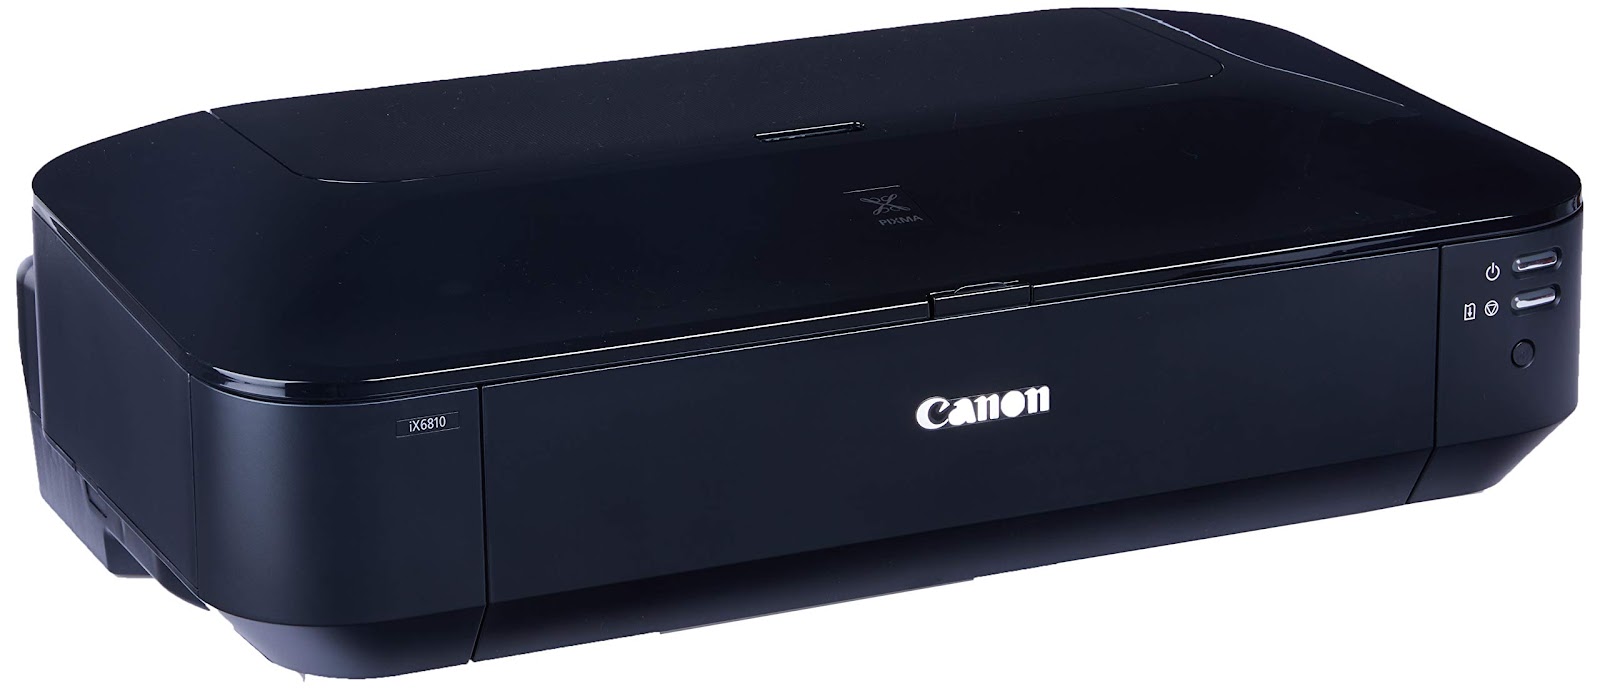 Impressora fotográfica A3+ com Wi-Fi Canon iX6810